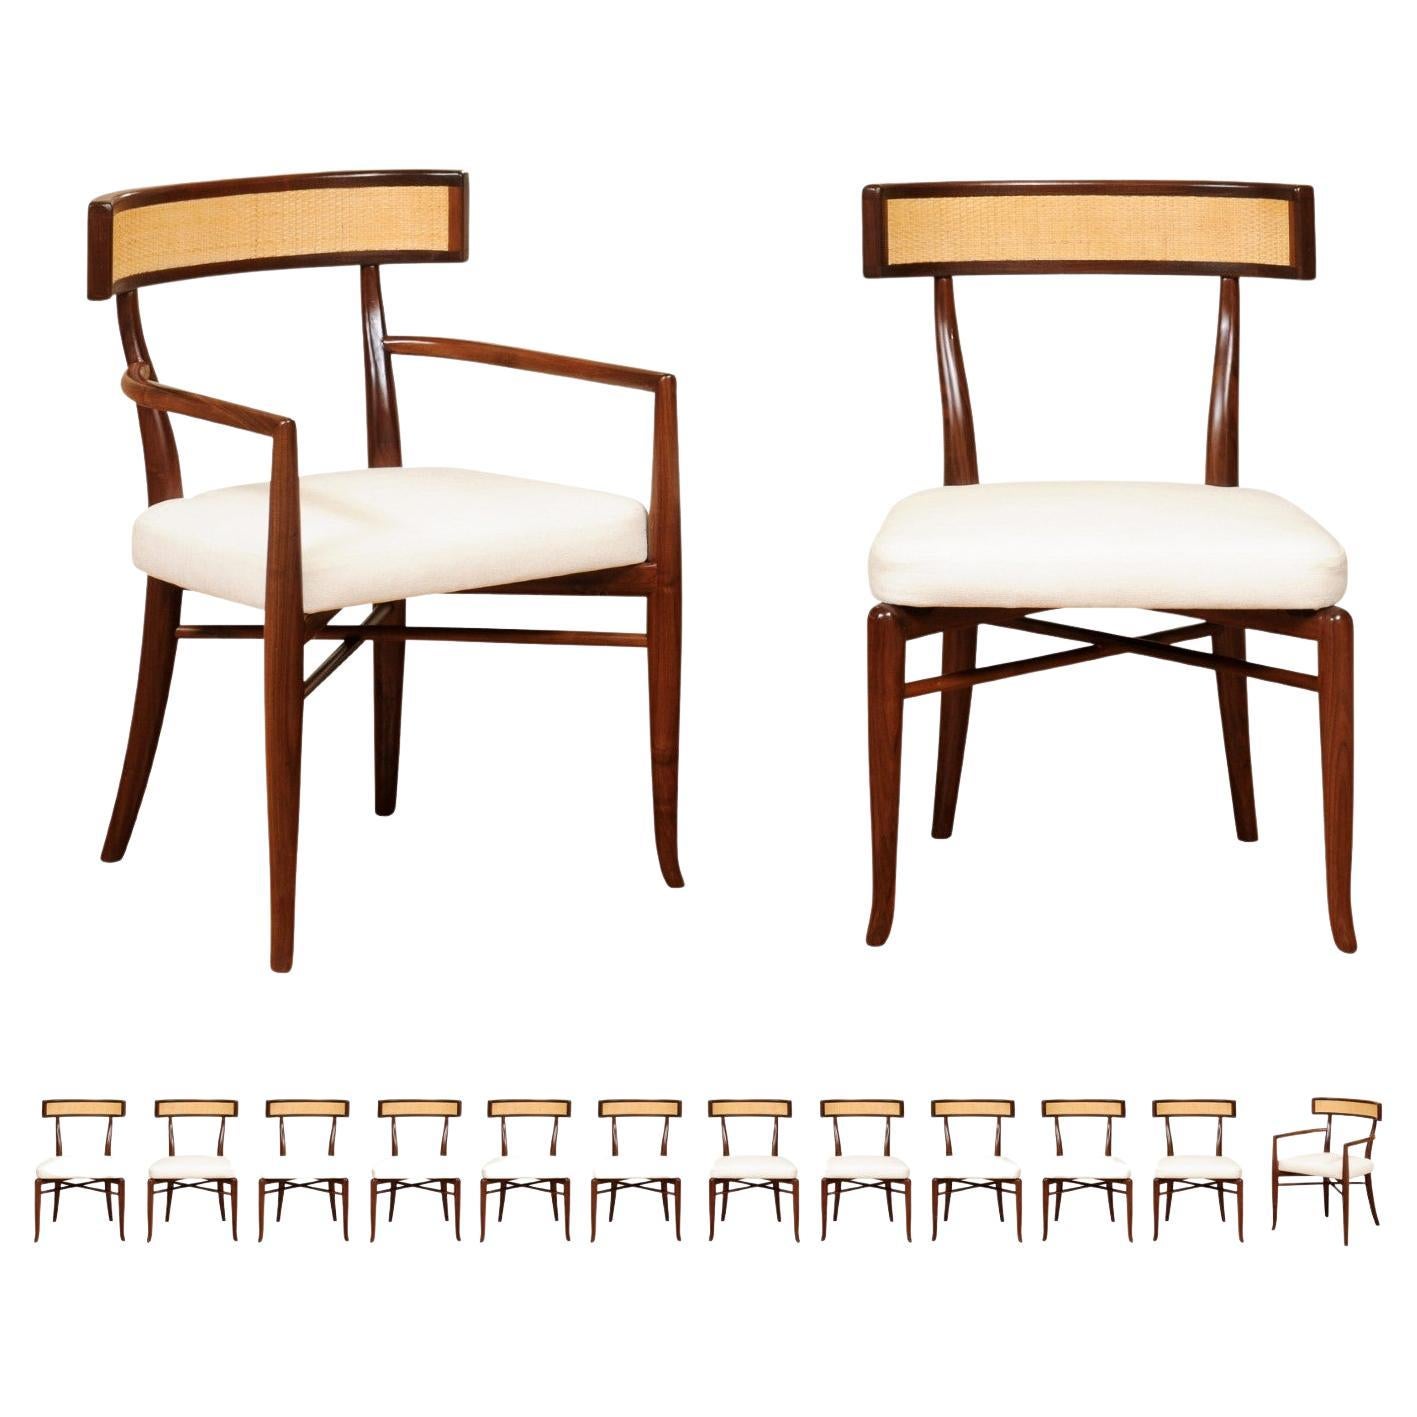 Extraordinary Set of 14 Klismos Chairs by Robsjohn-Gibbings, Custom Cane Back For Sale